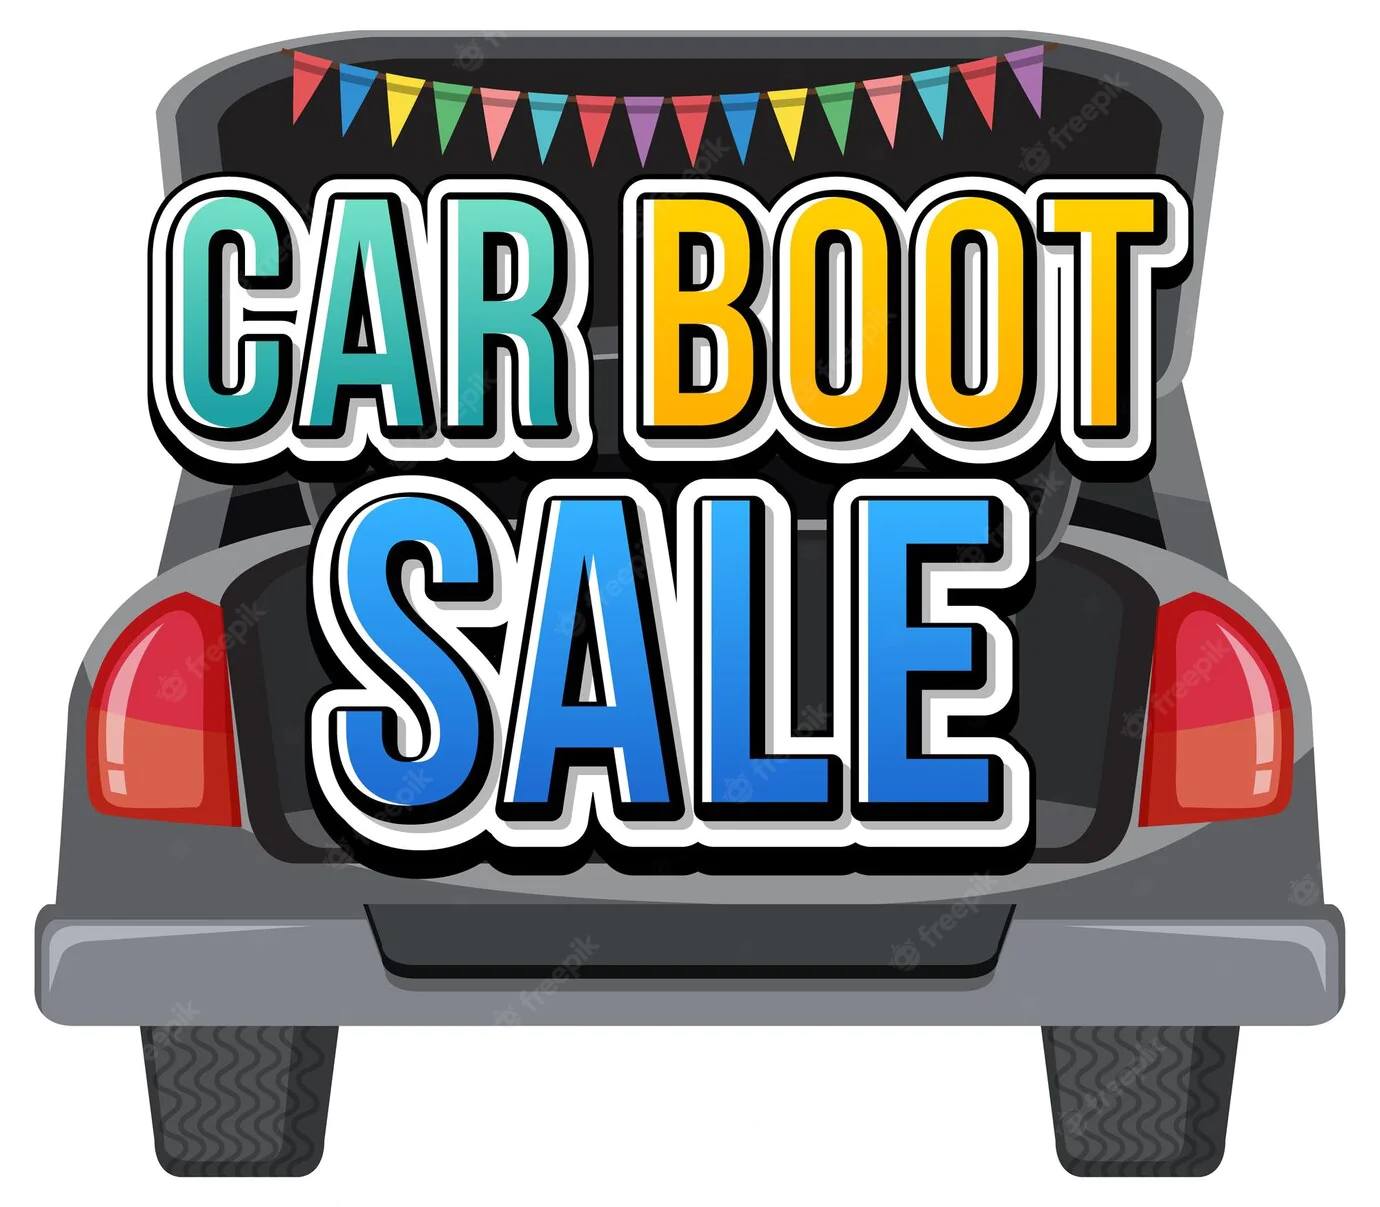 Charity Car Boot Sale